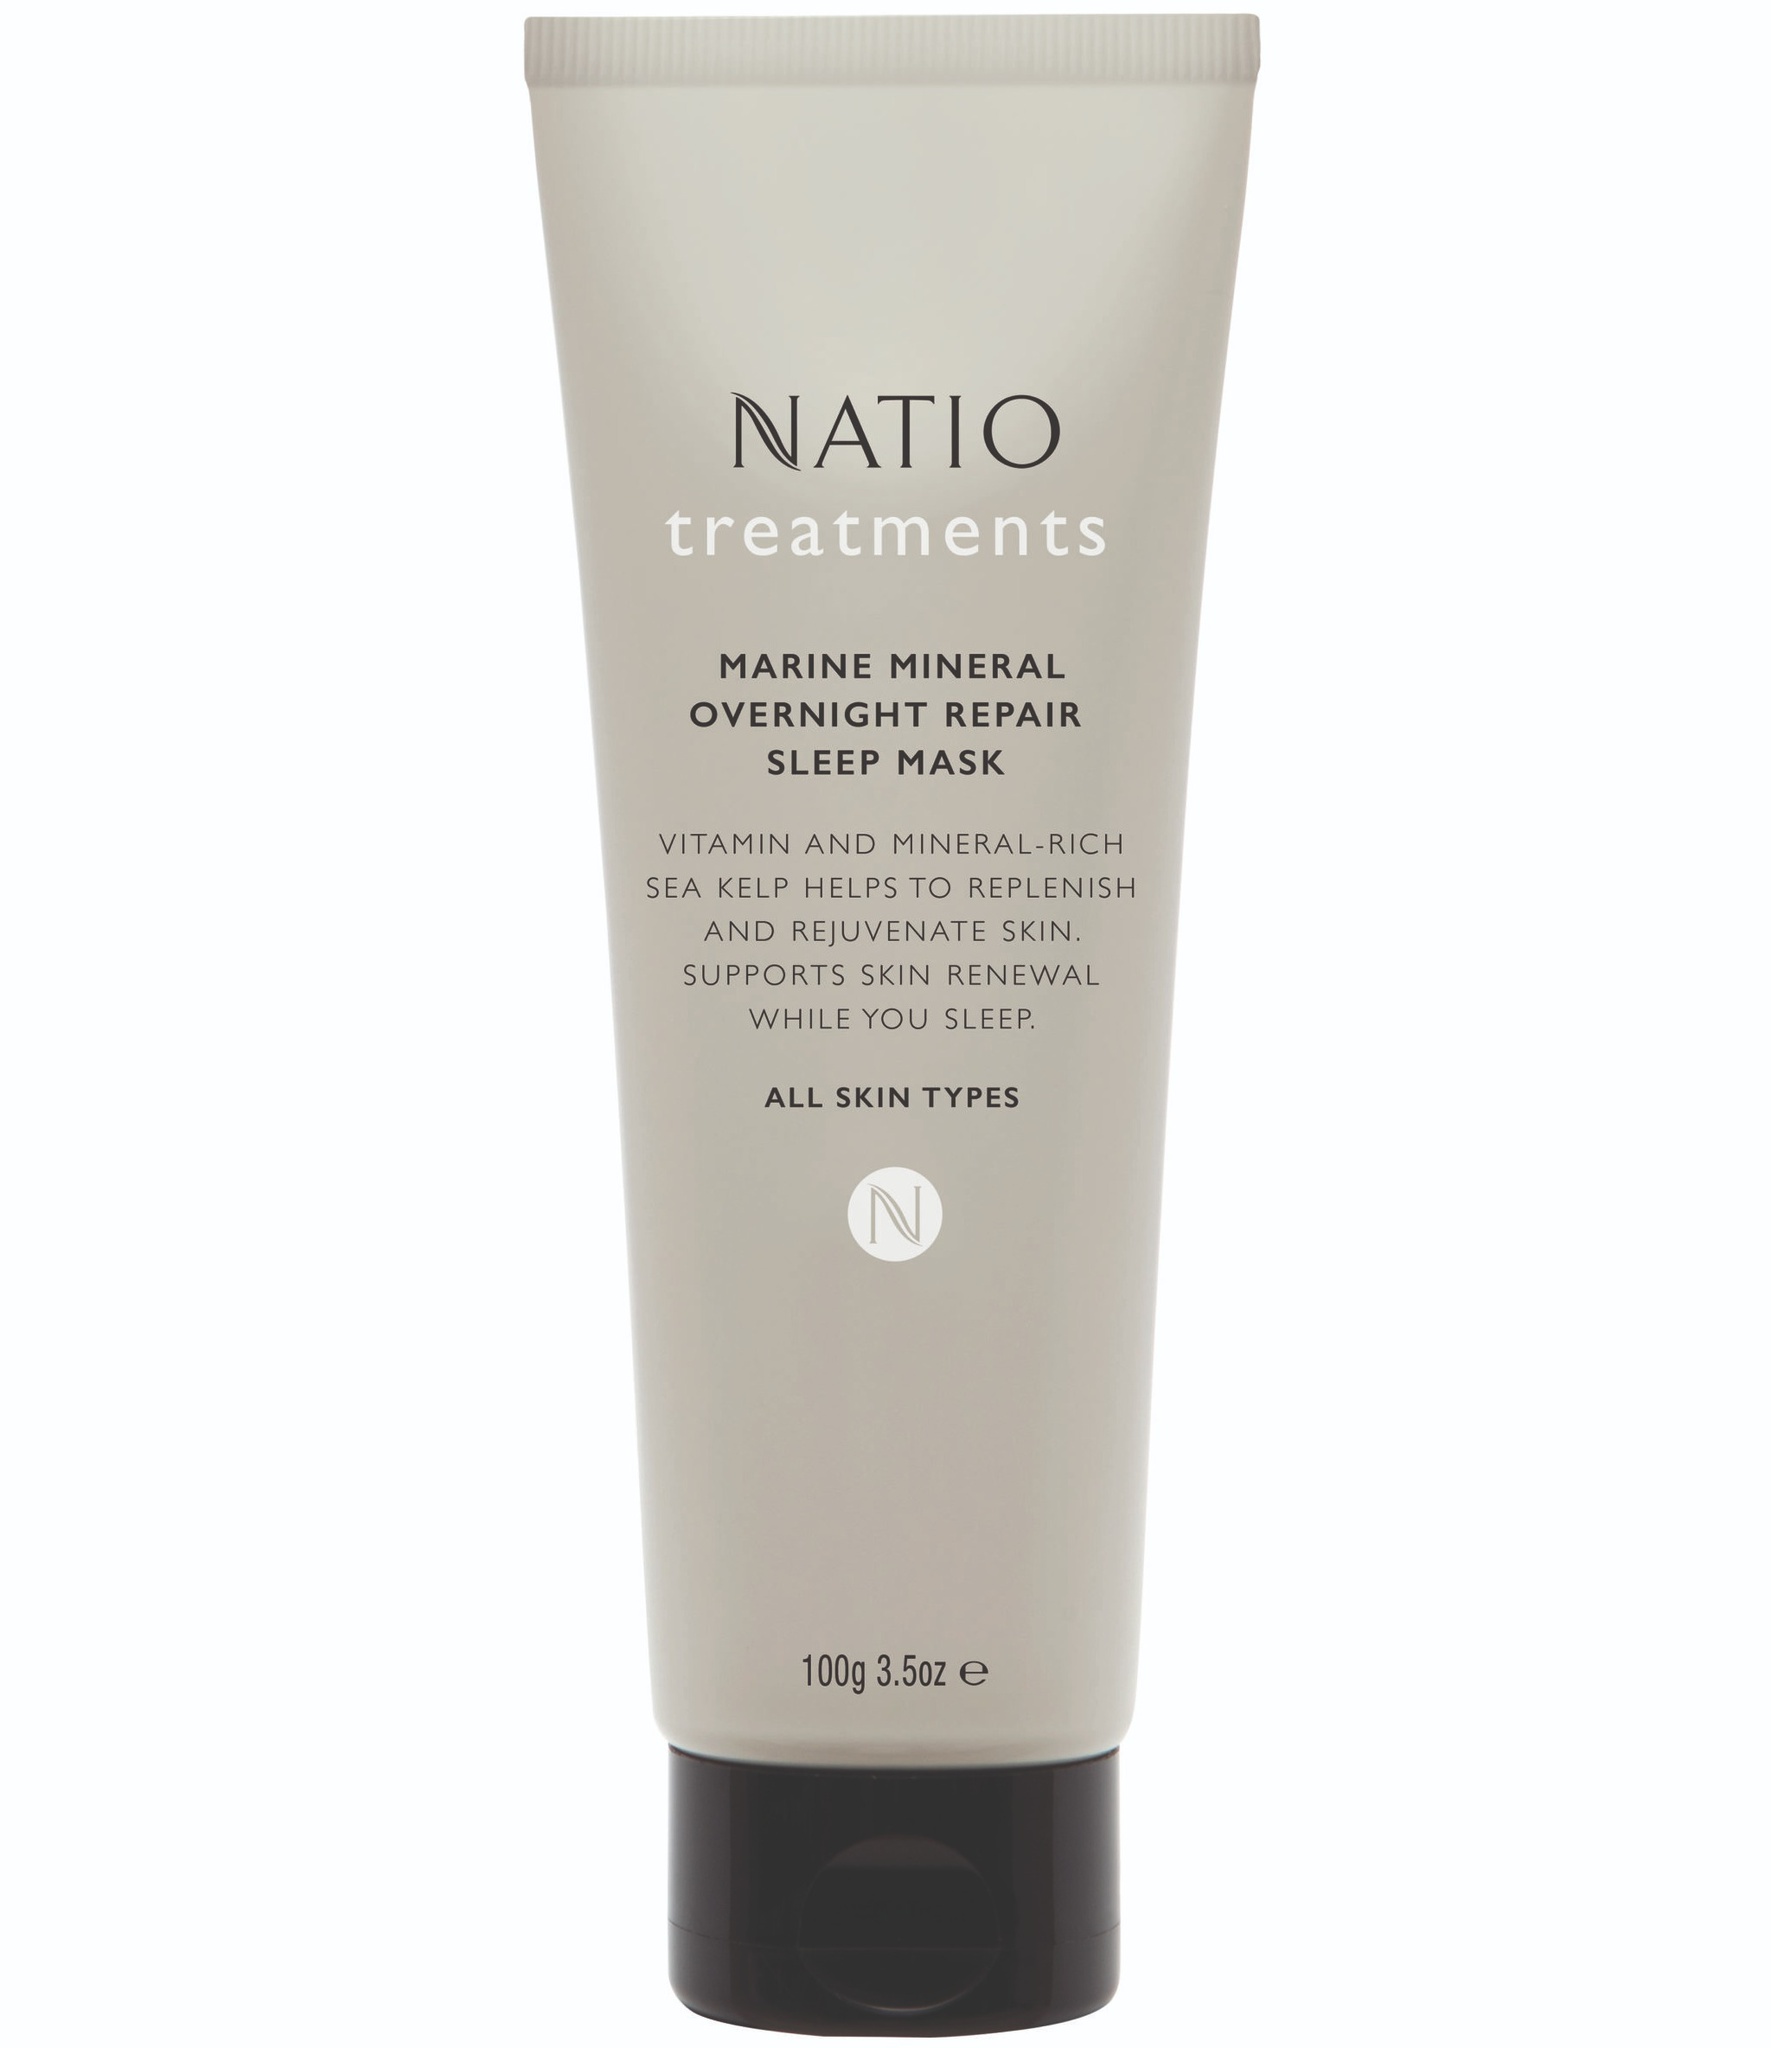 Natio treatments Marine Mineral Overnight Repair Sleep Mask